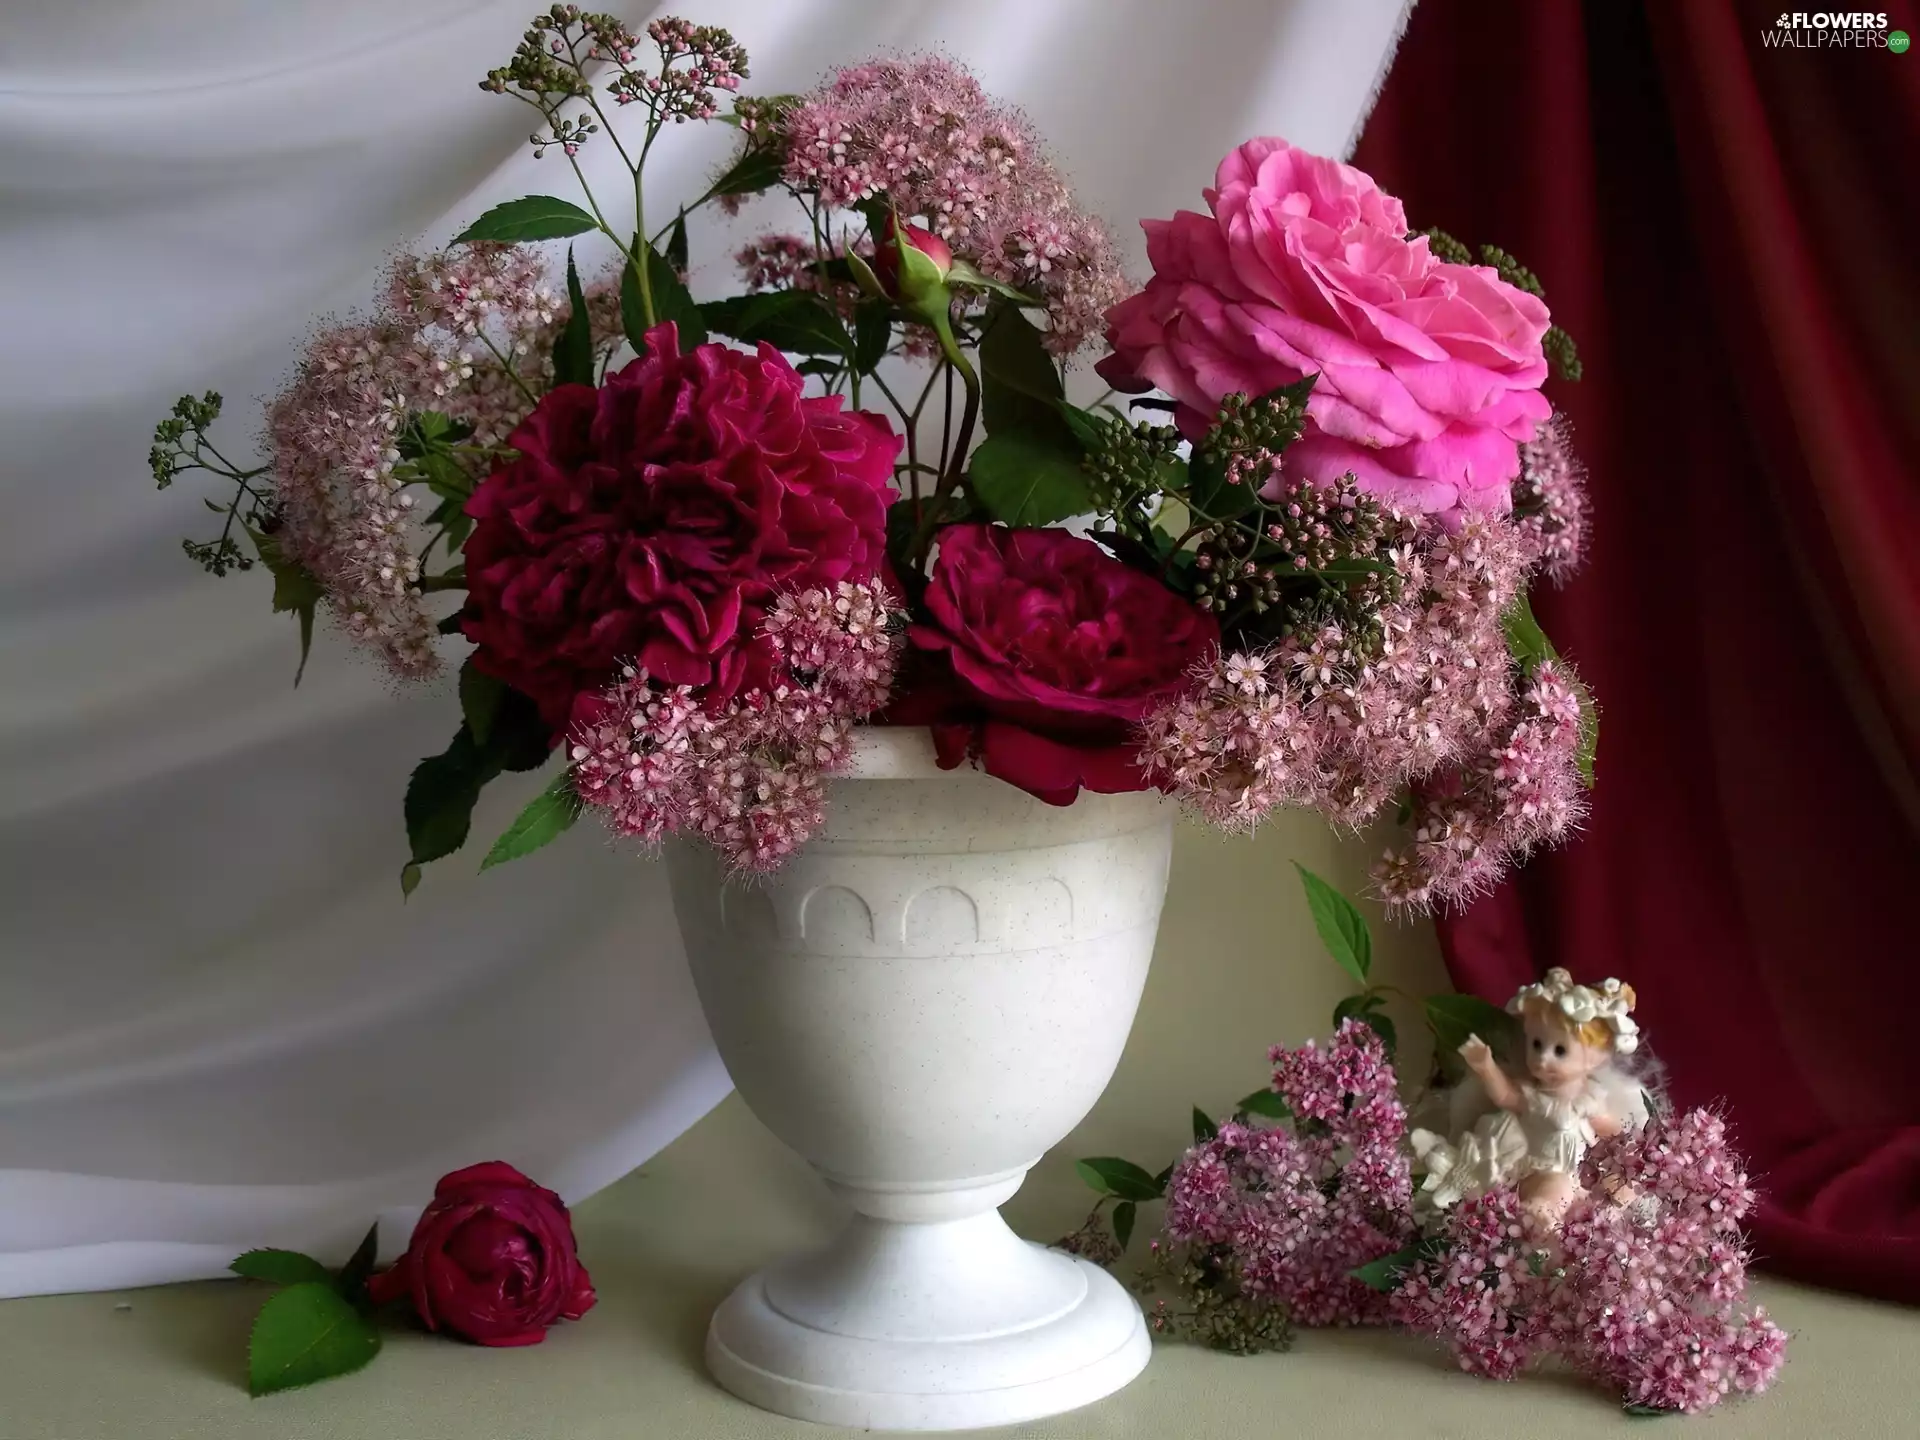 Vase, Flowers, roses